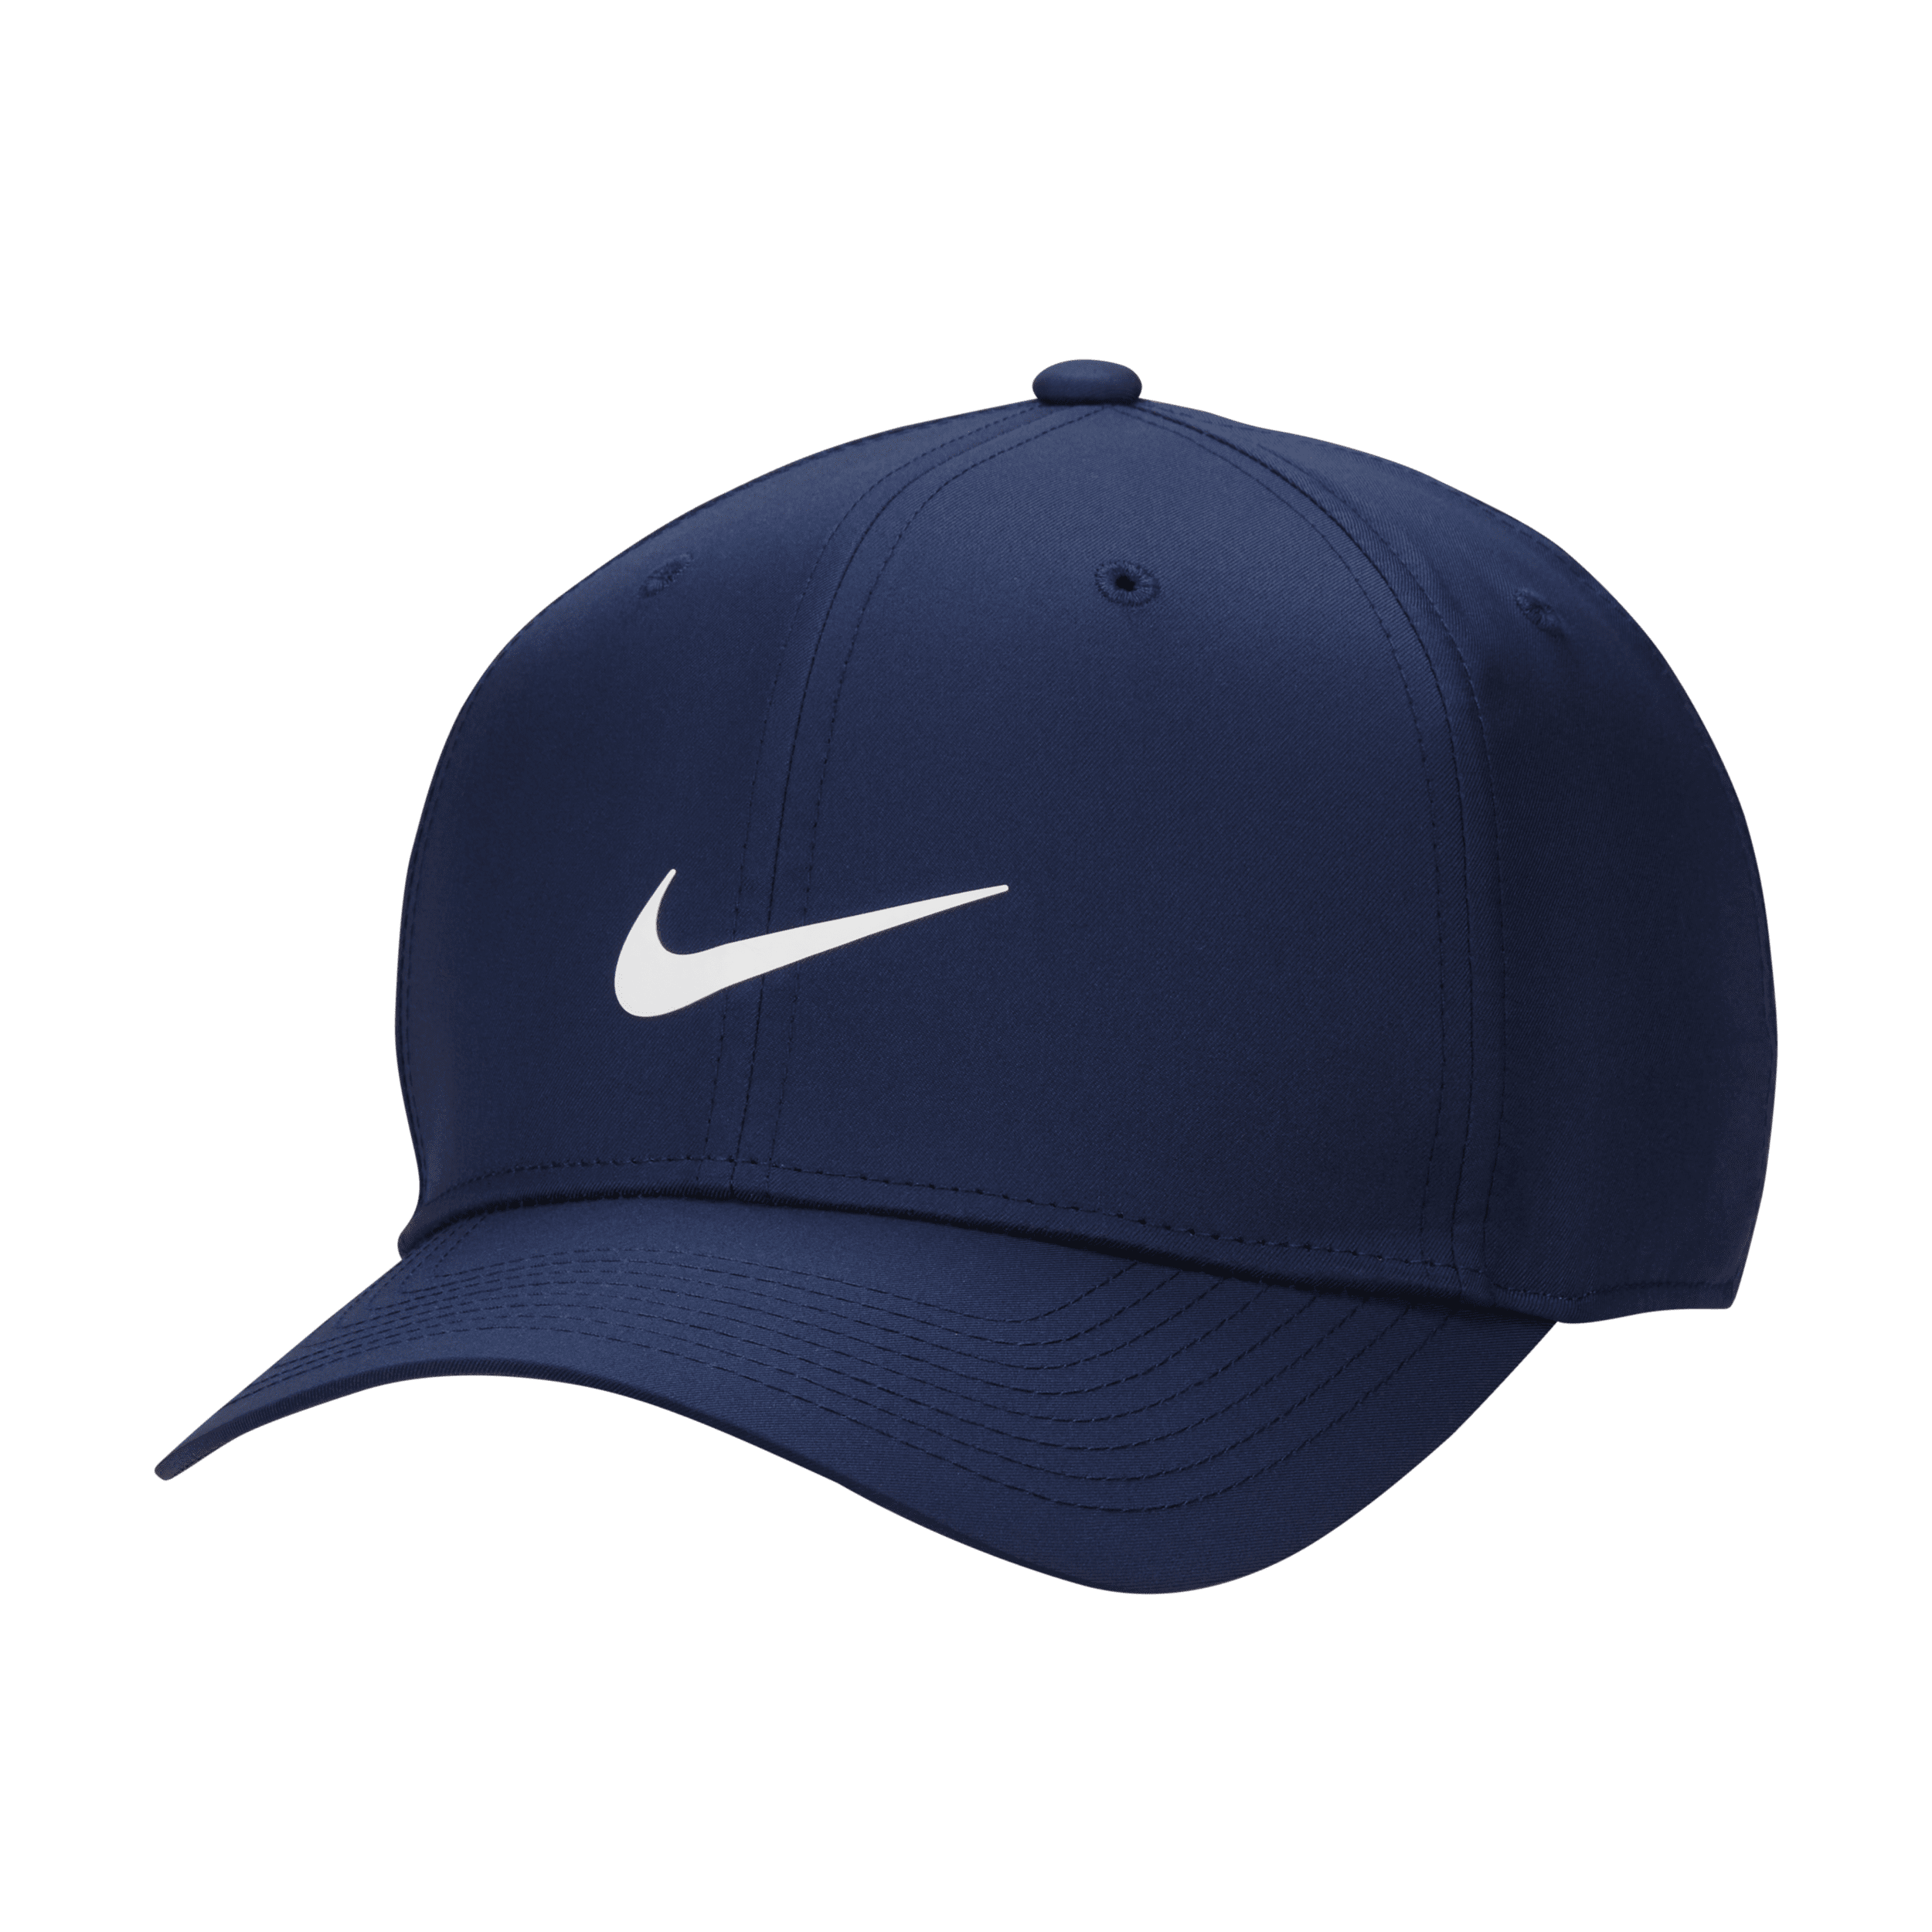 Nike Dri-FIT Rise Gorra estructurada con cierre a presión posterior - Azul